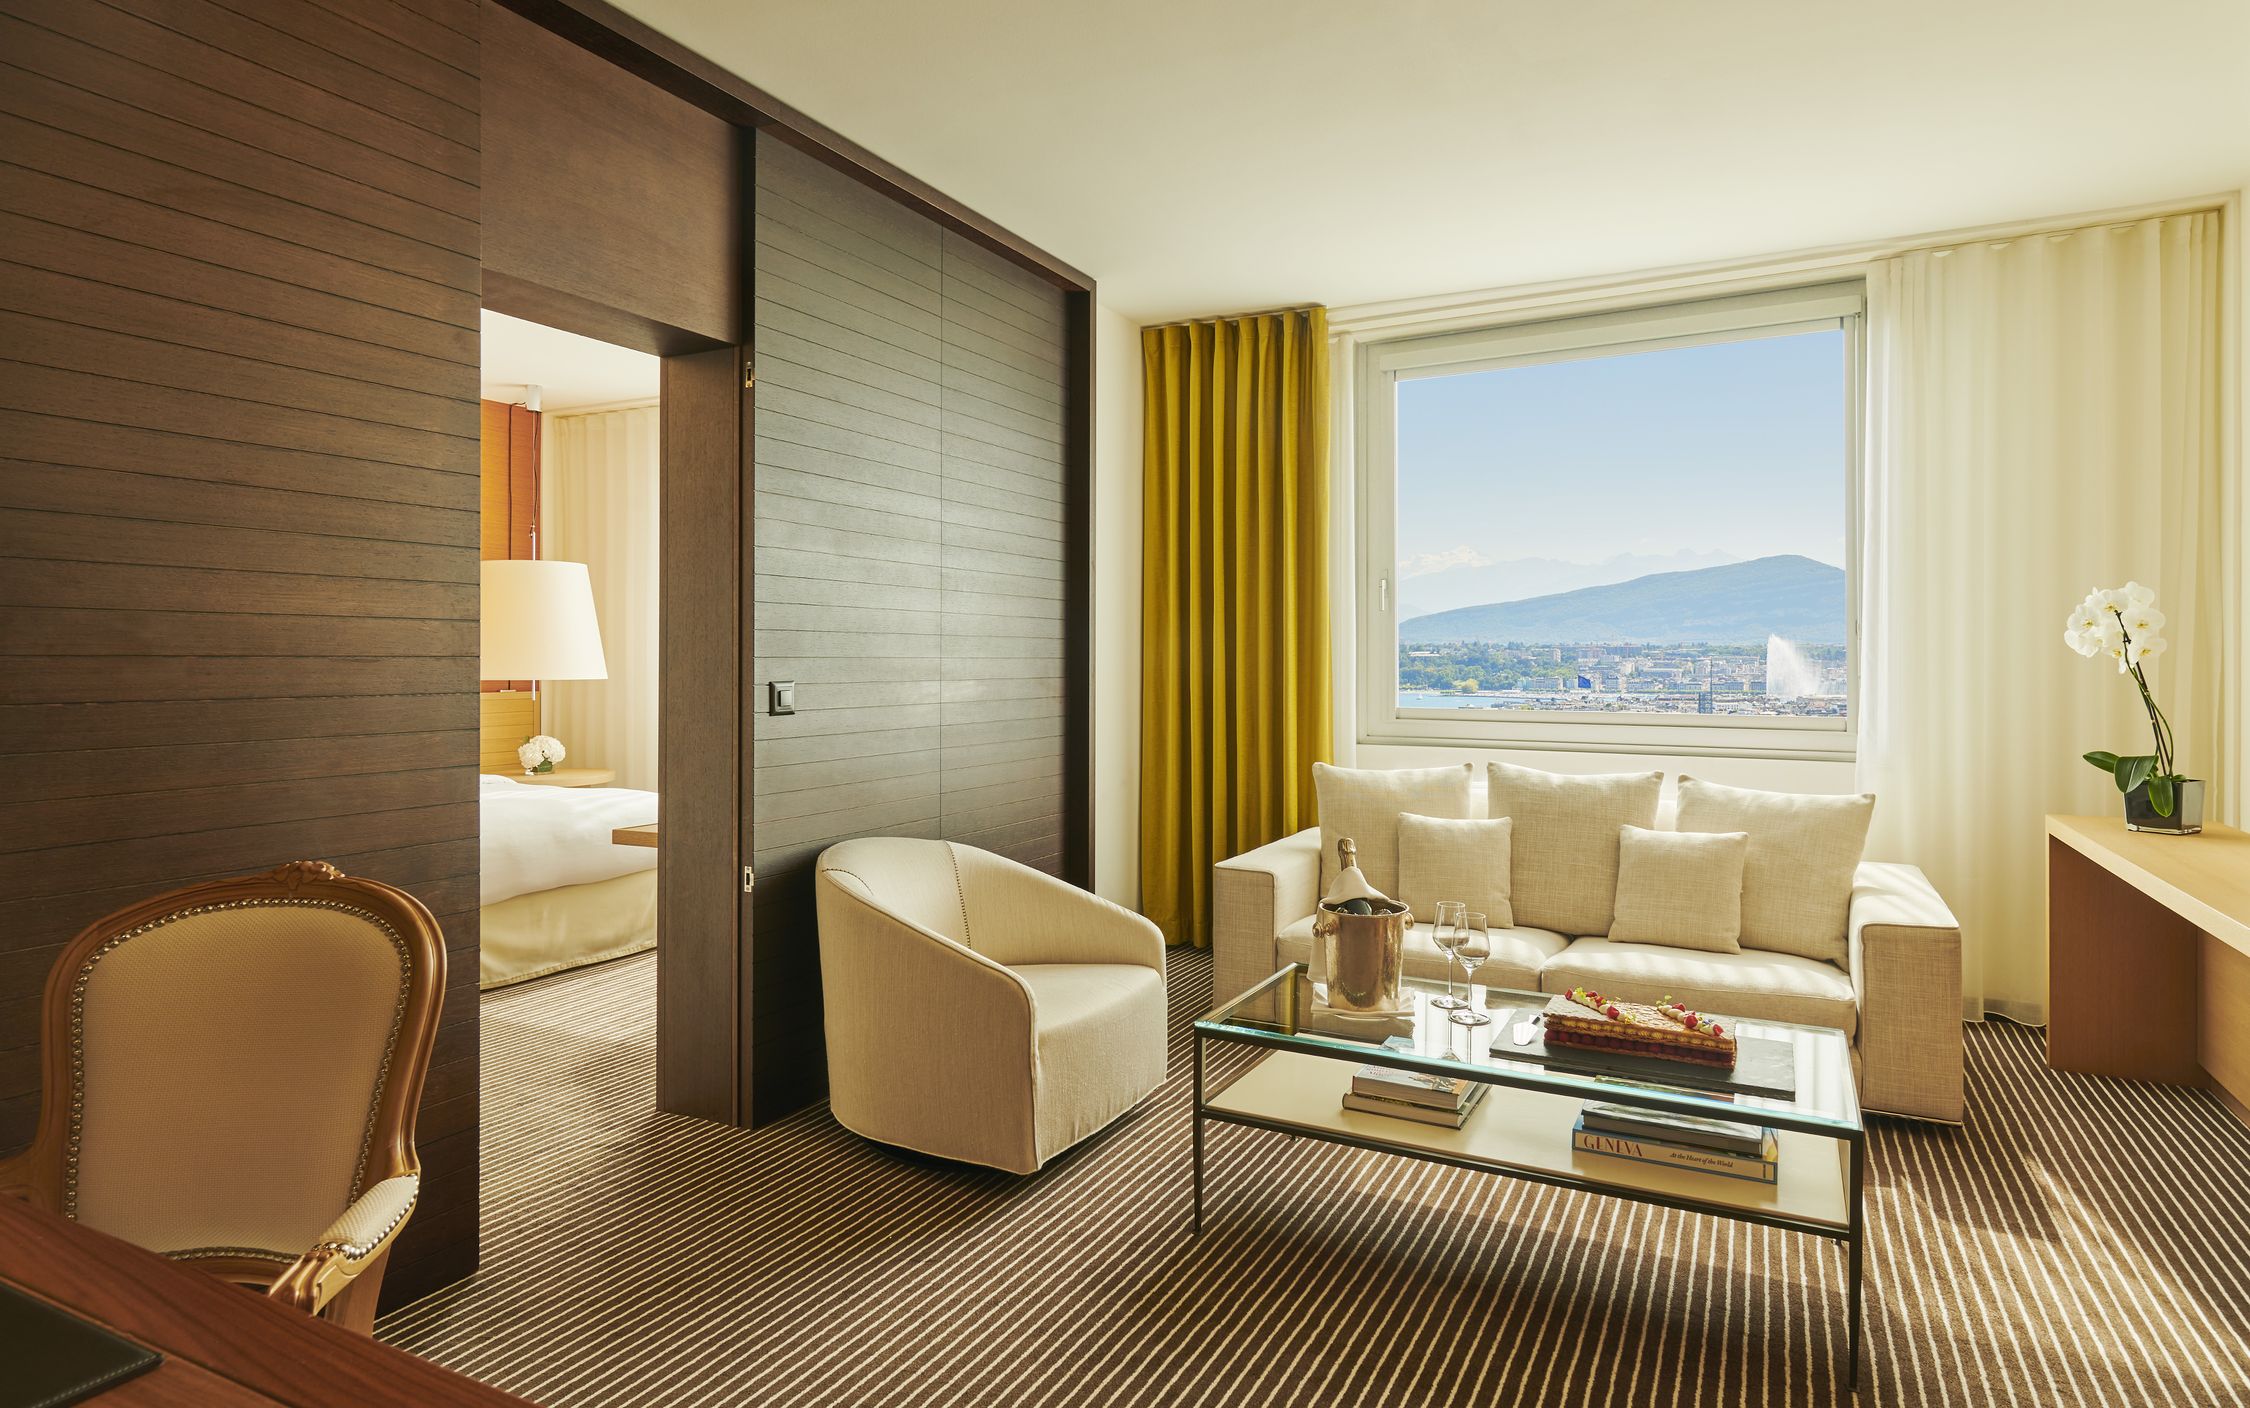 InterContinental-Geneve-One-Bedroom-Room-lake-view